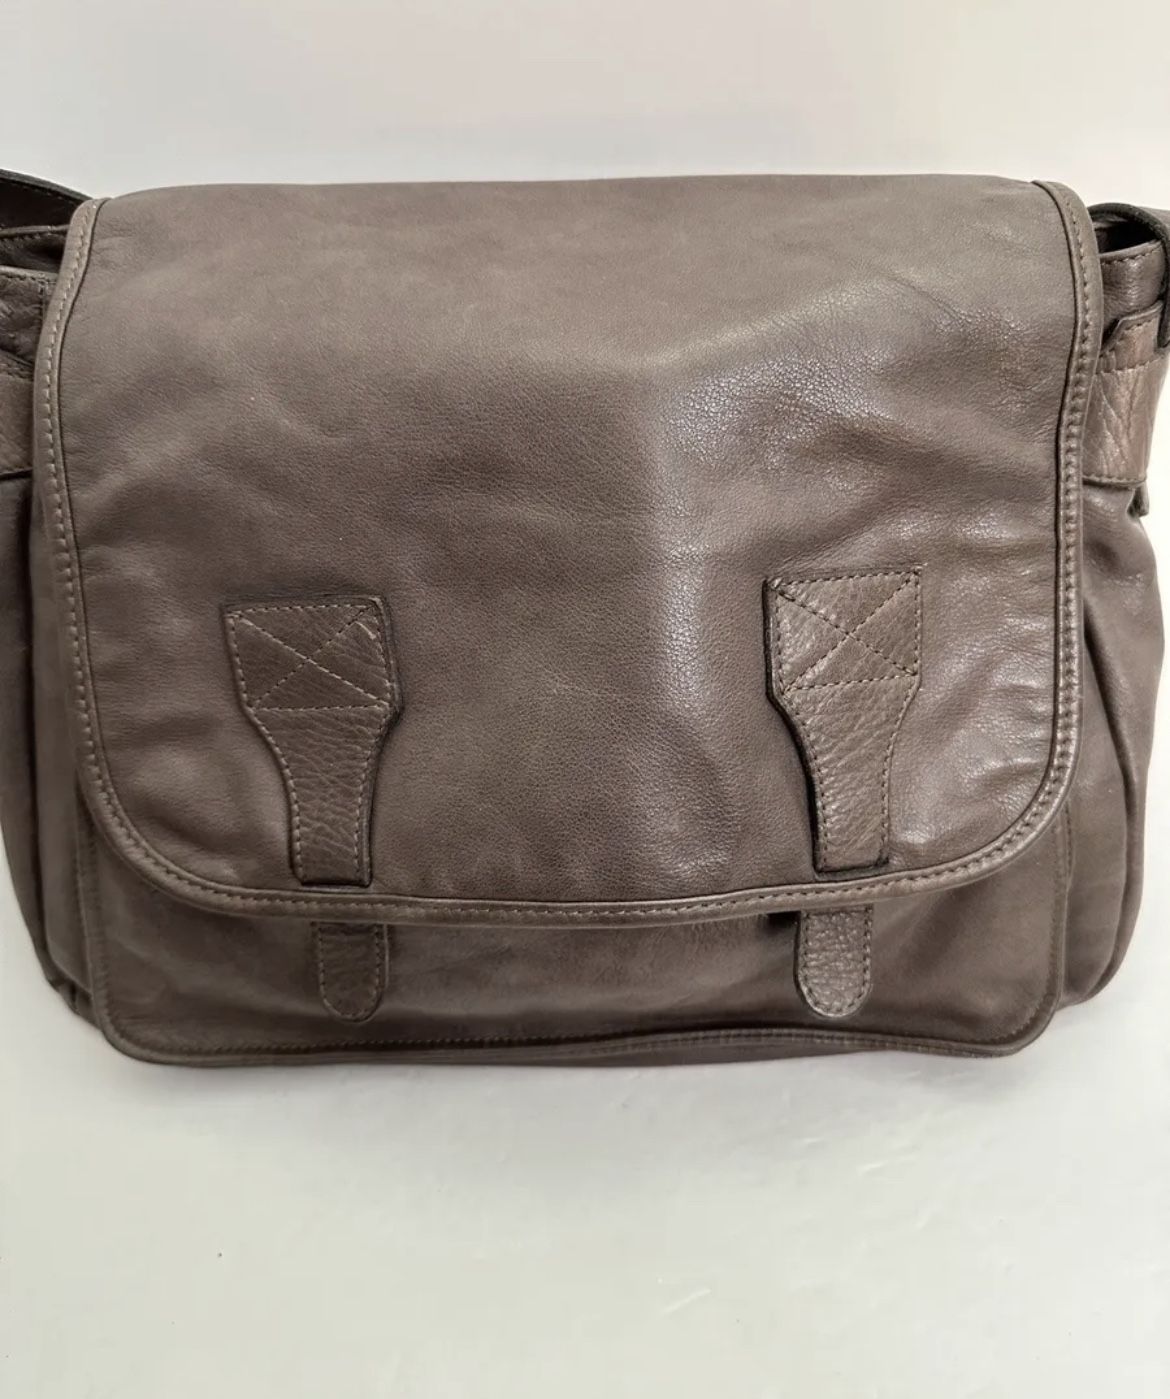 Kaem Paris Leather Messenger Bag Handbag Purse Taupe Soft Made in France Leather, gorgeous color